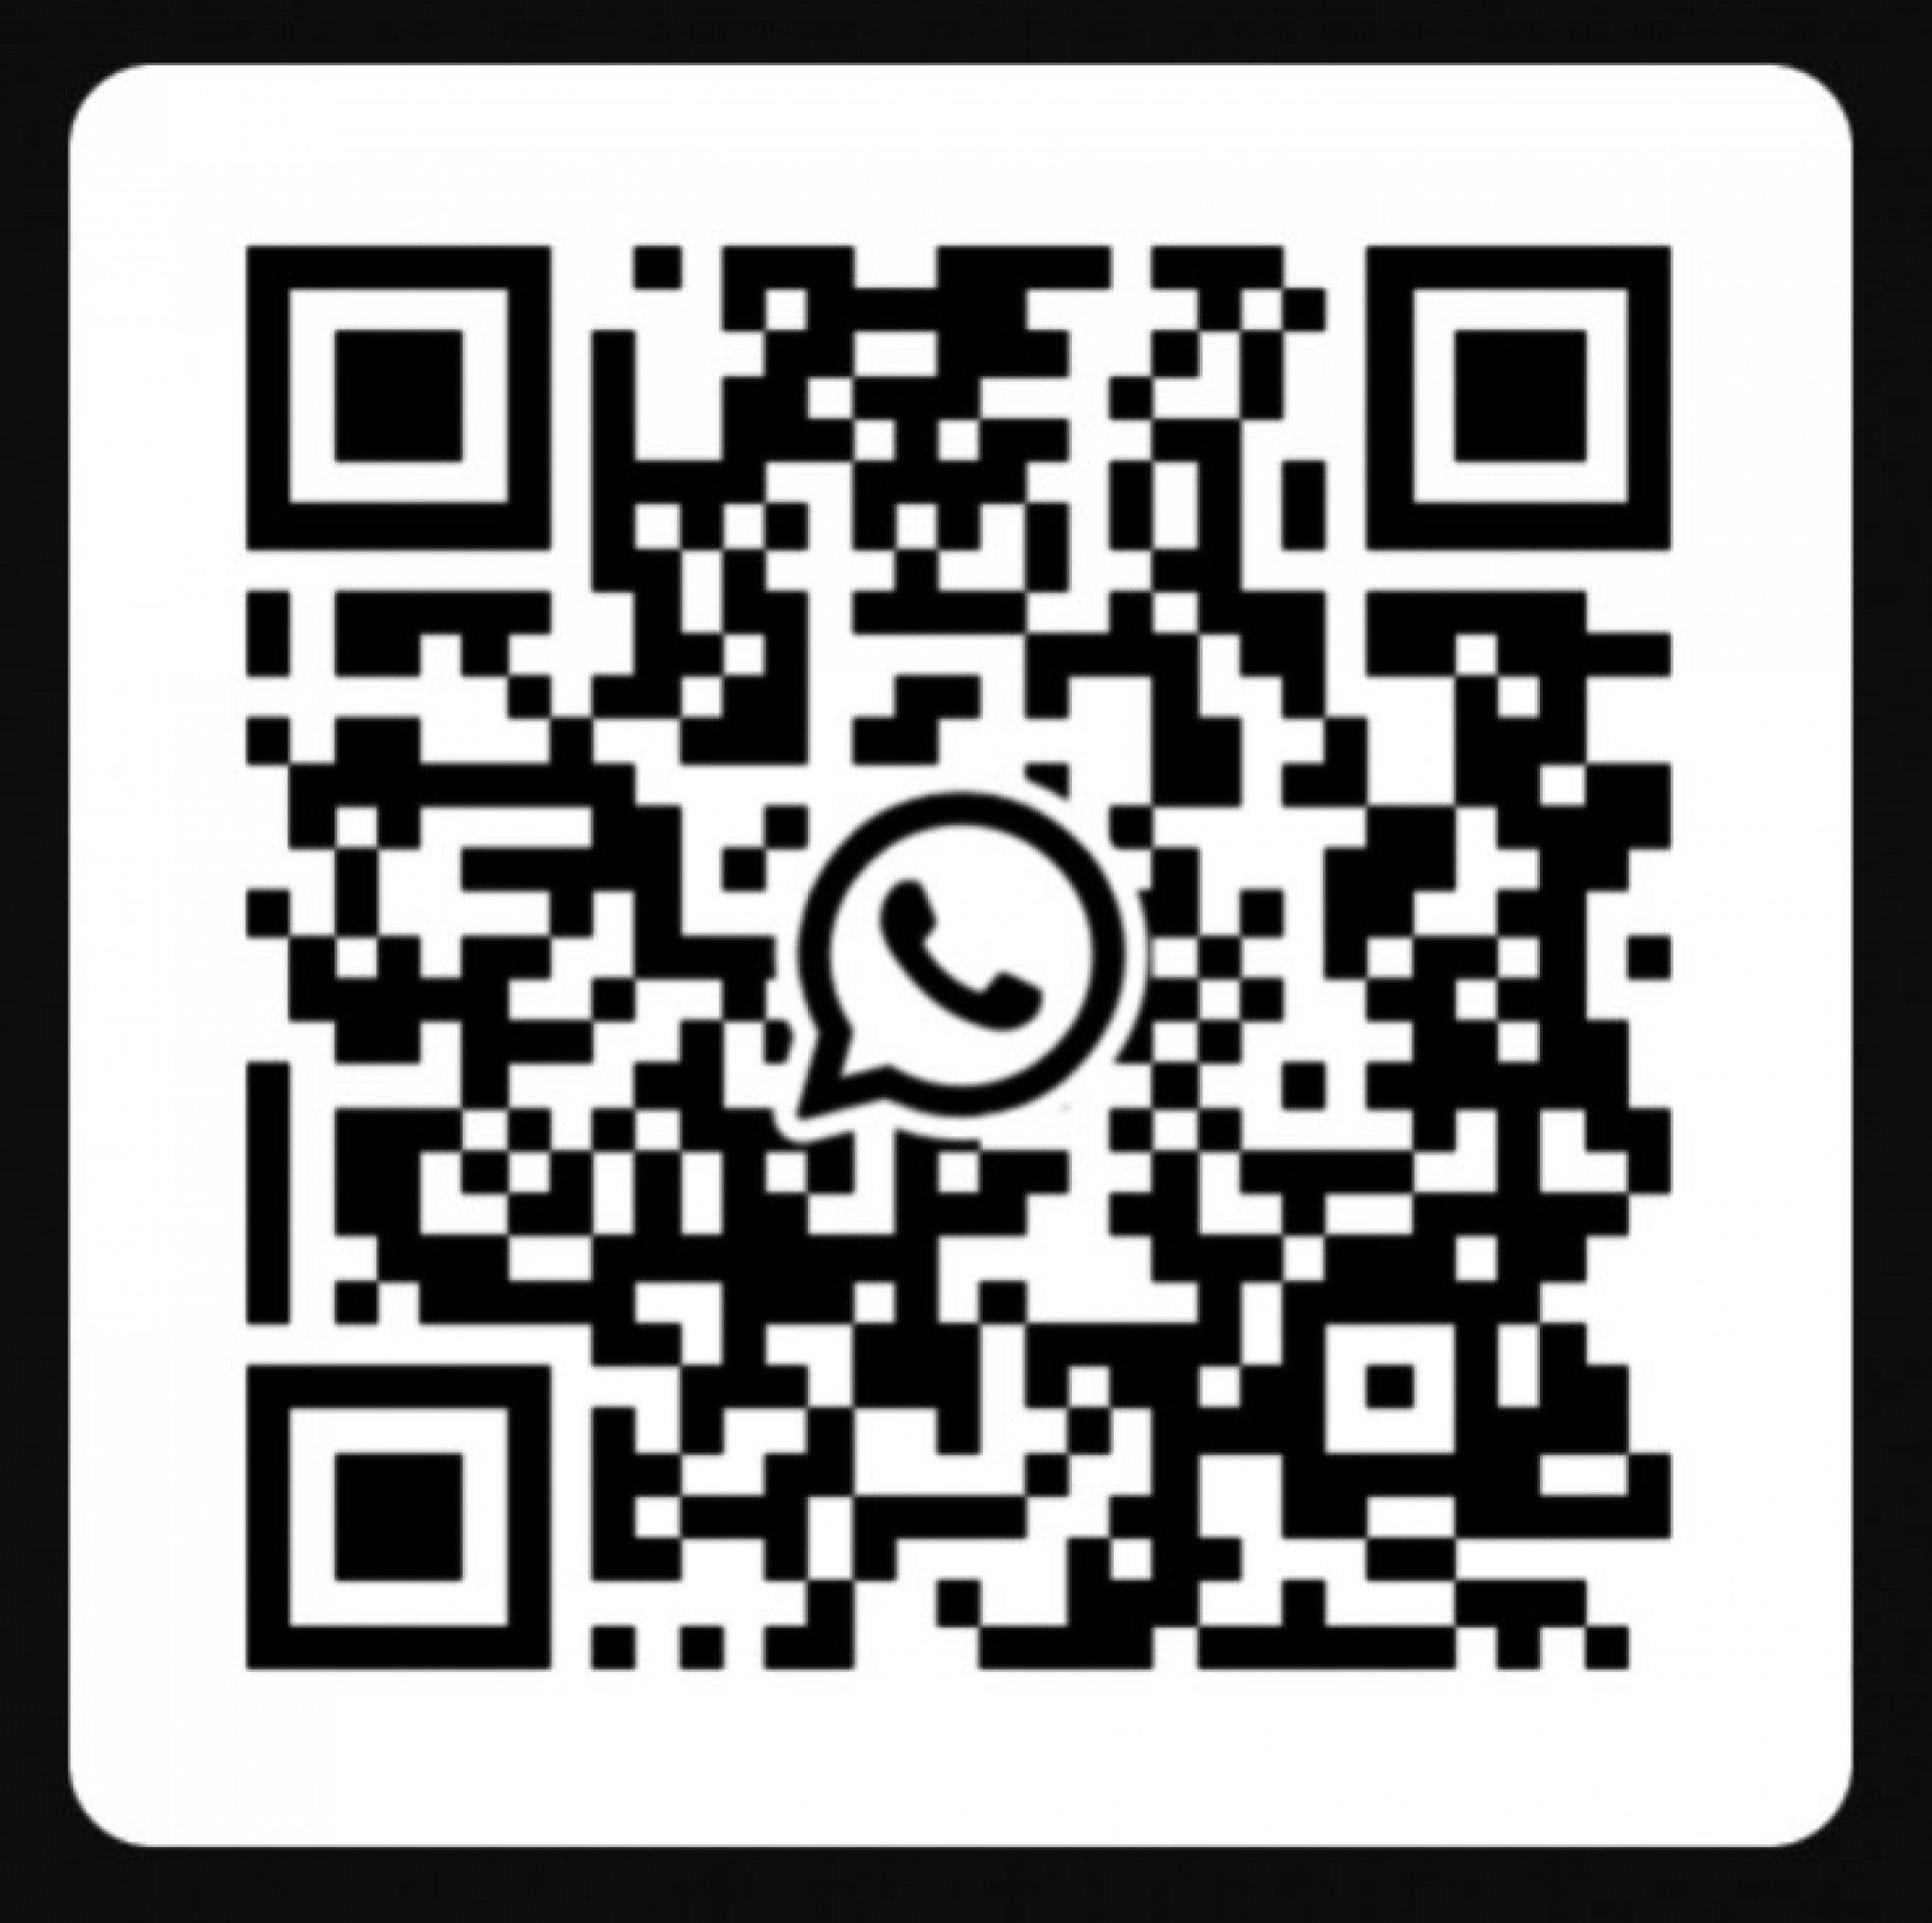 QR Code para acessar comunidade do Jornal NH no WhatsApp